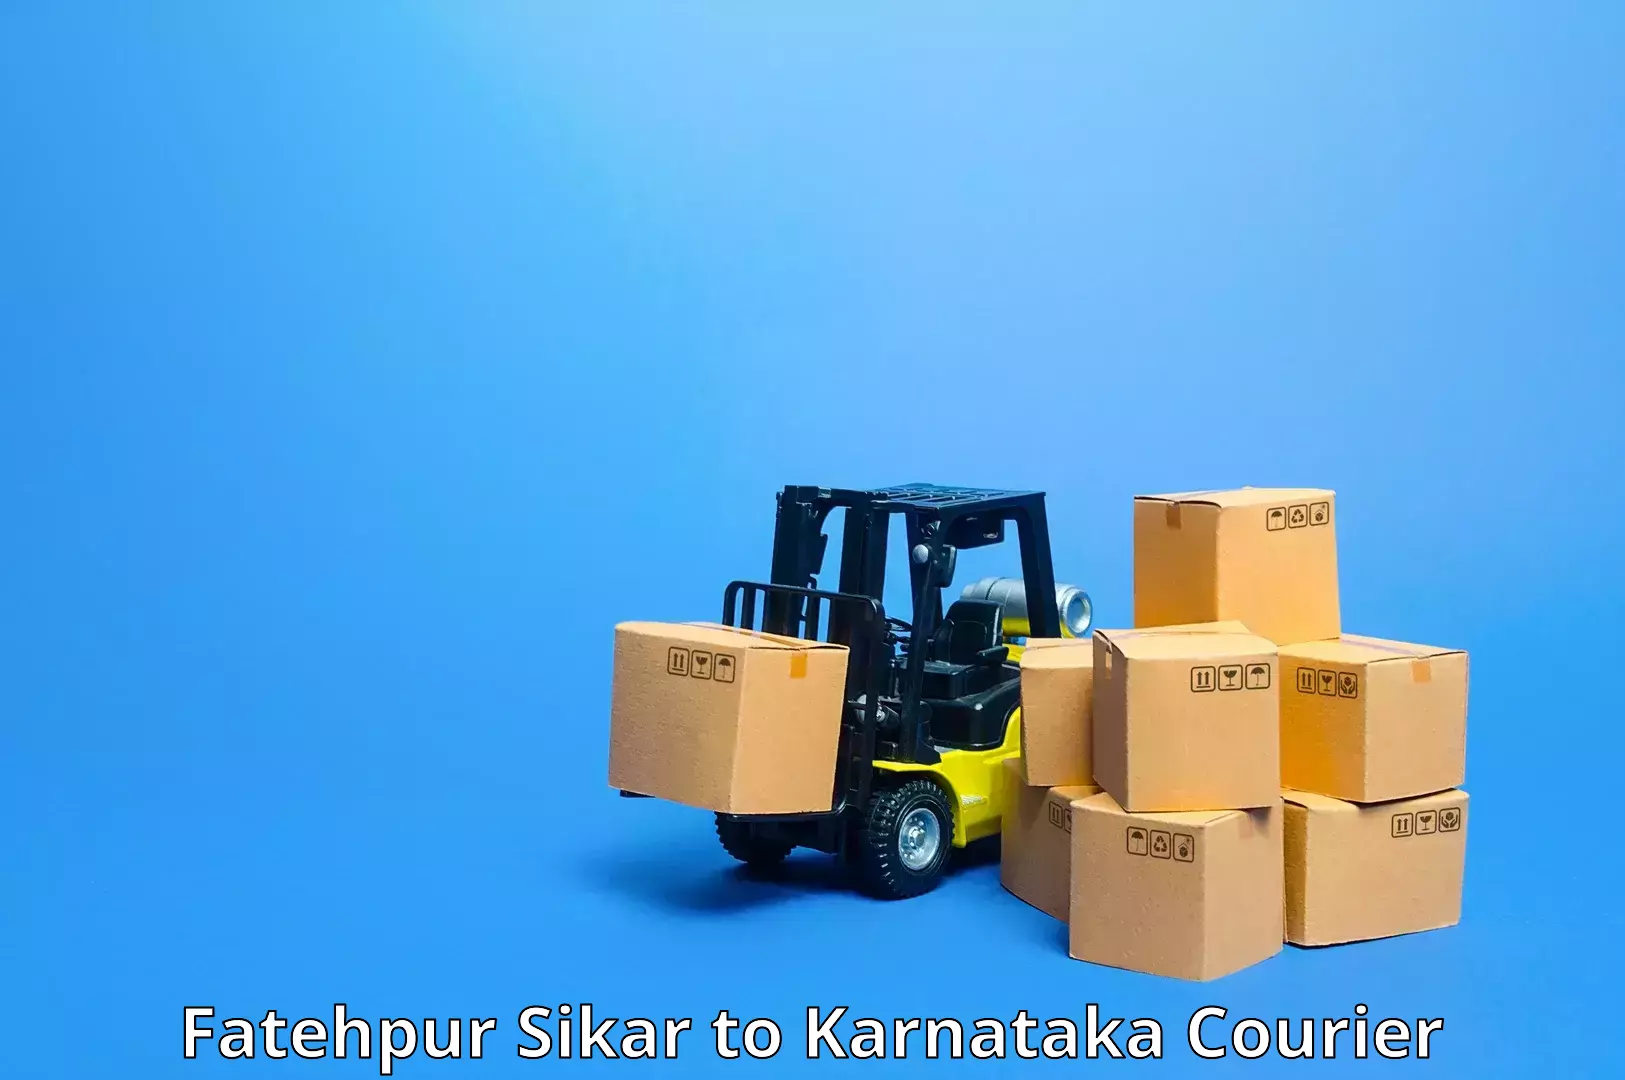 Global shipping solutions Fatehpur Sikar to Karnataka